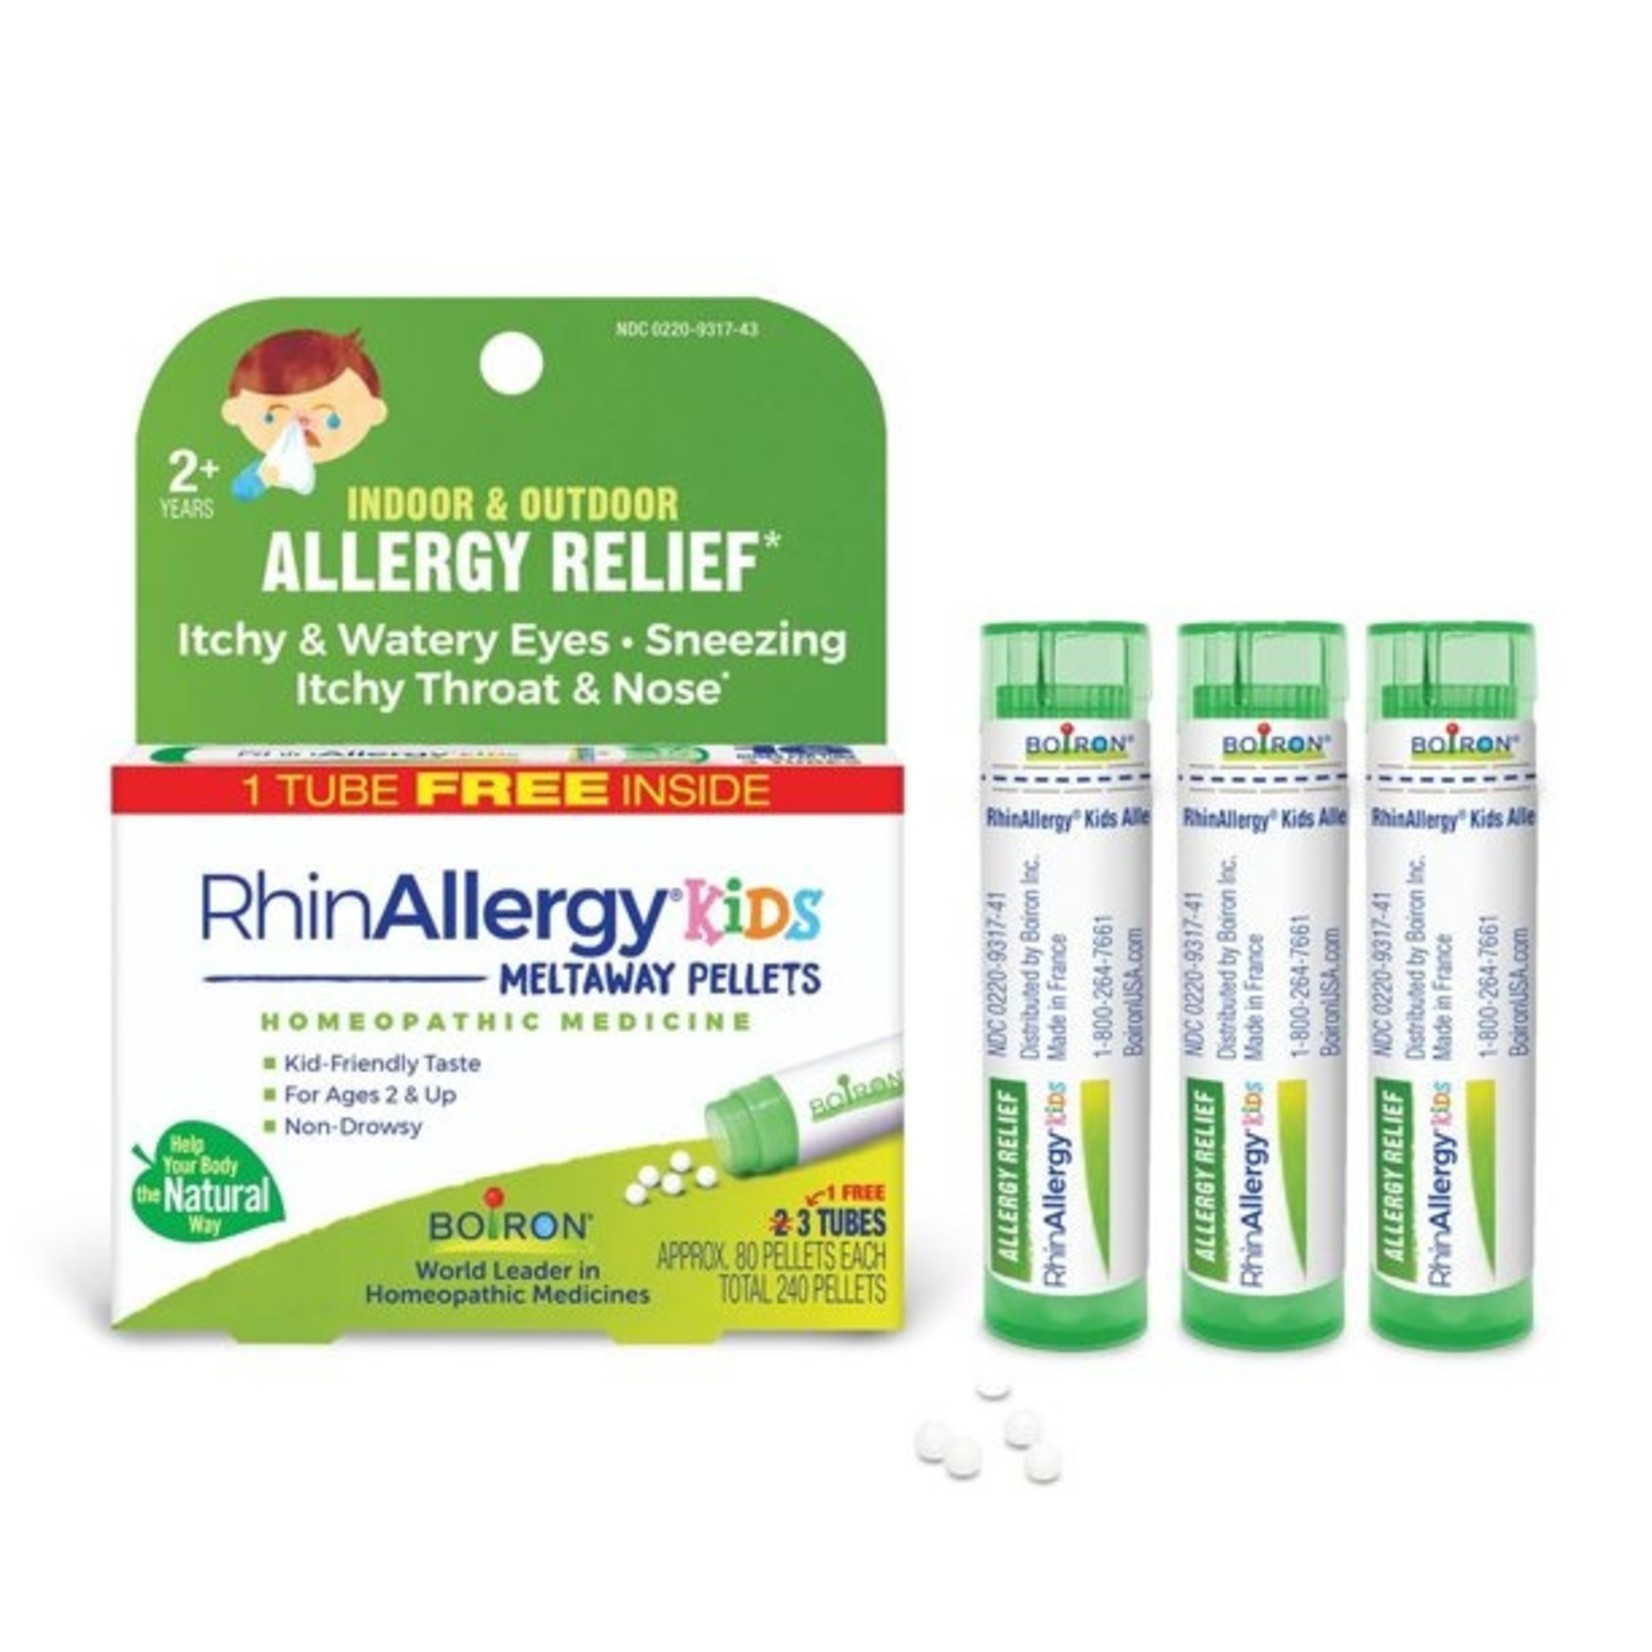 Boiron Boiron - Rhinallergy For Kids Allergy Relief - 3 Tablets